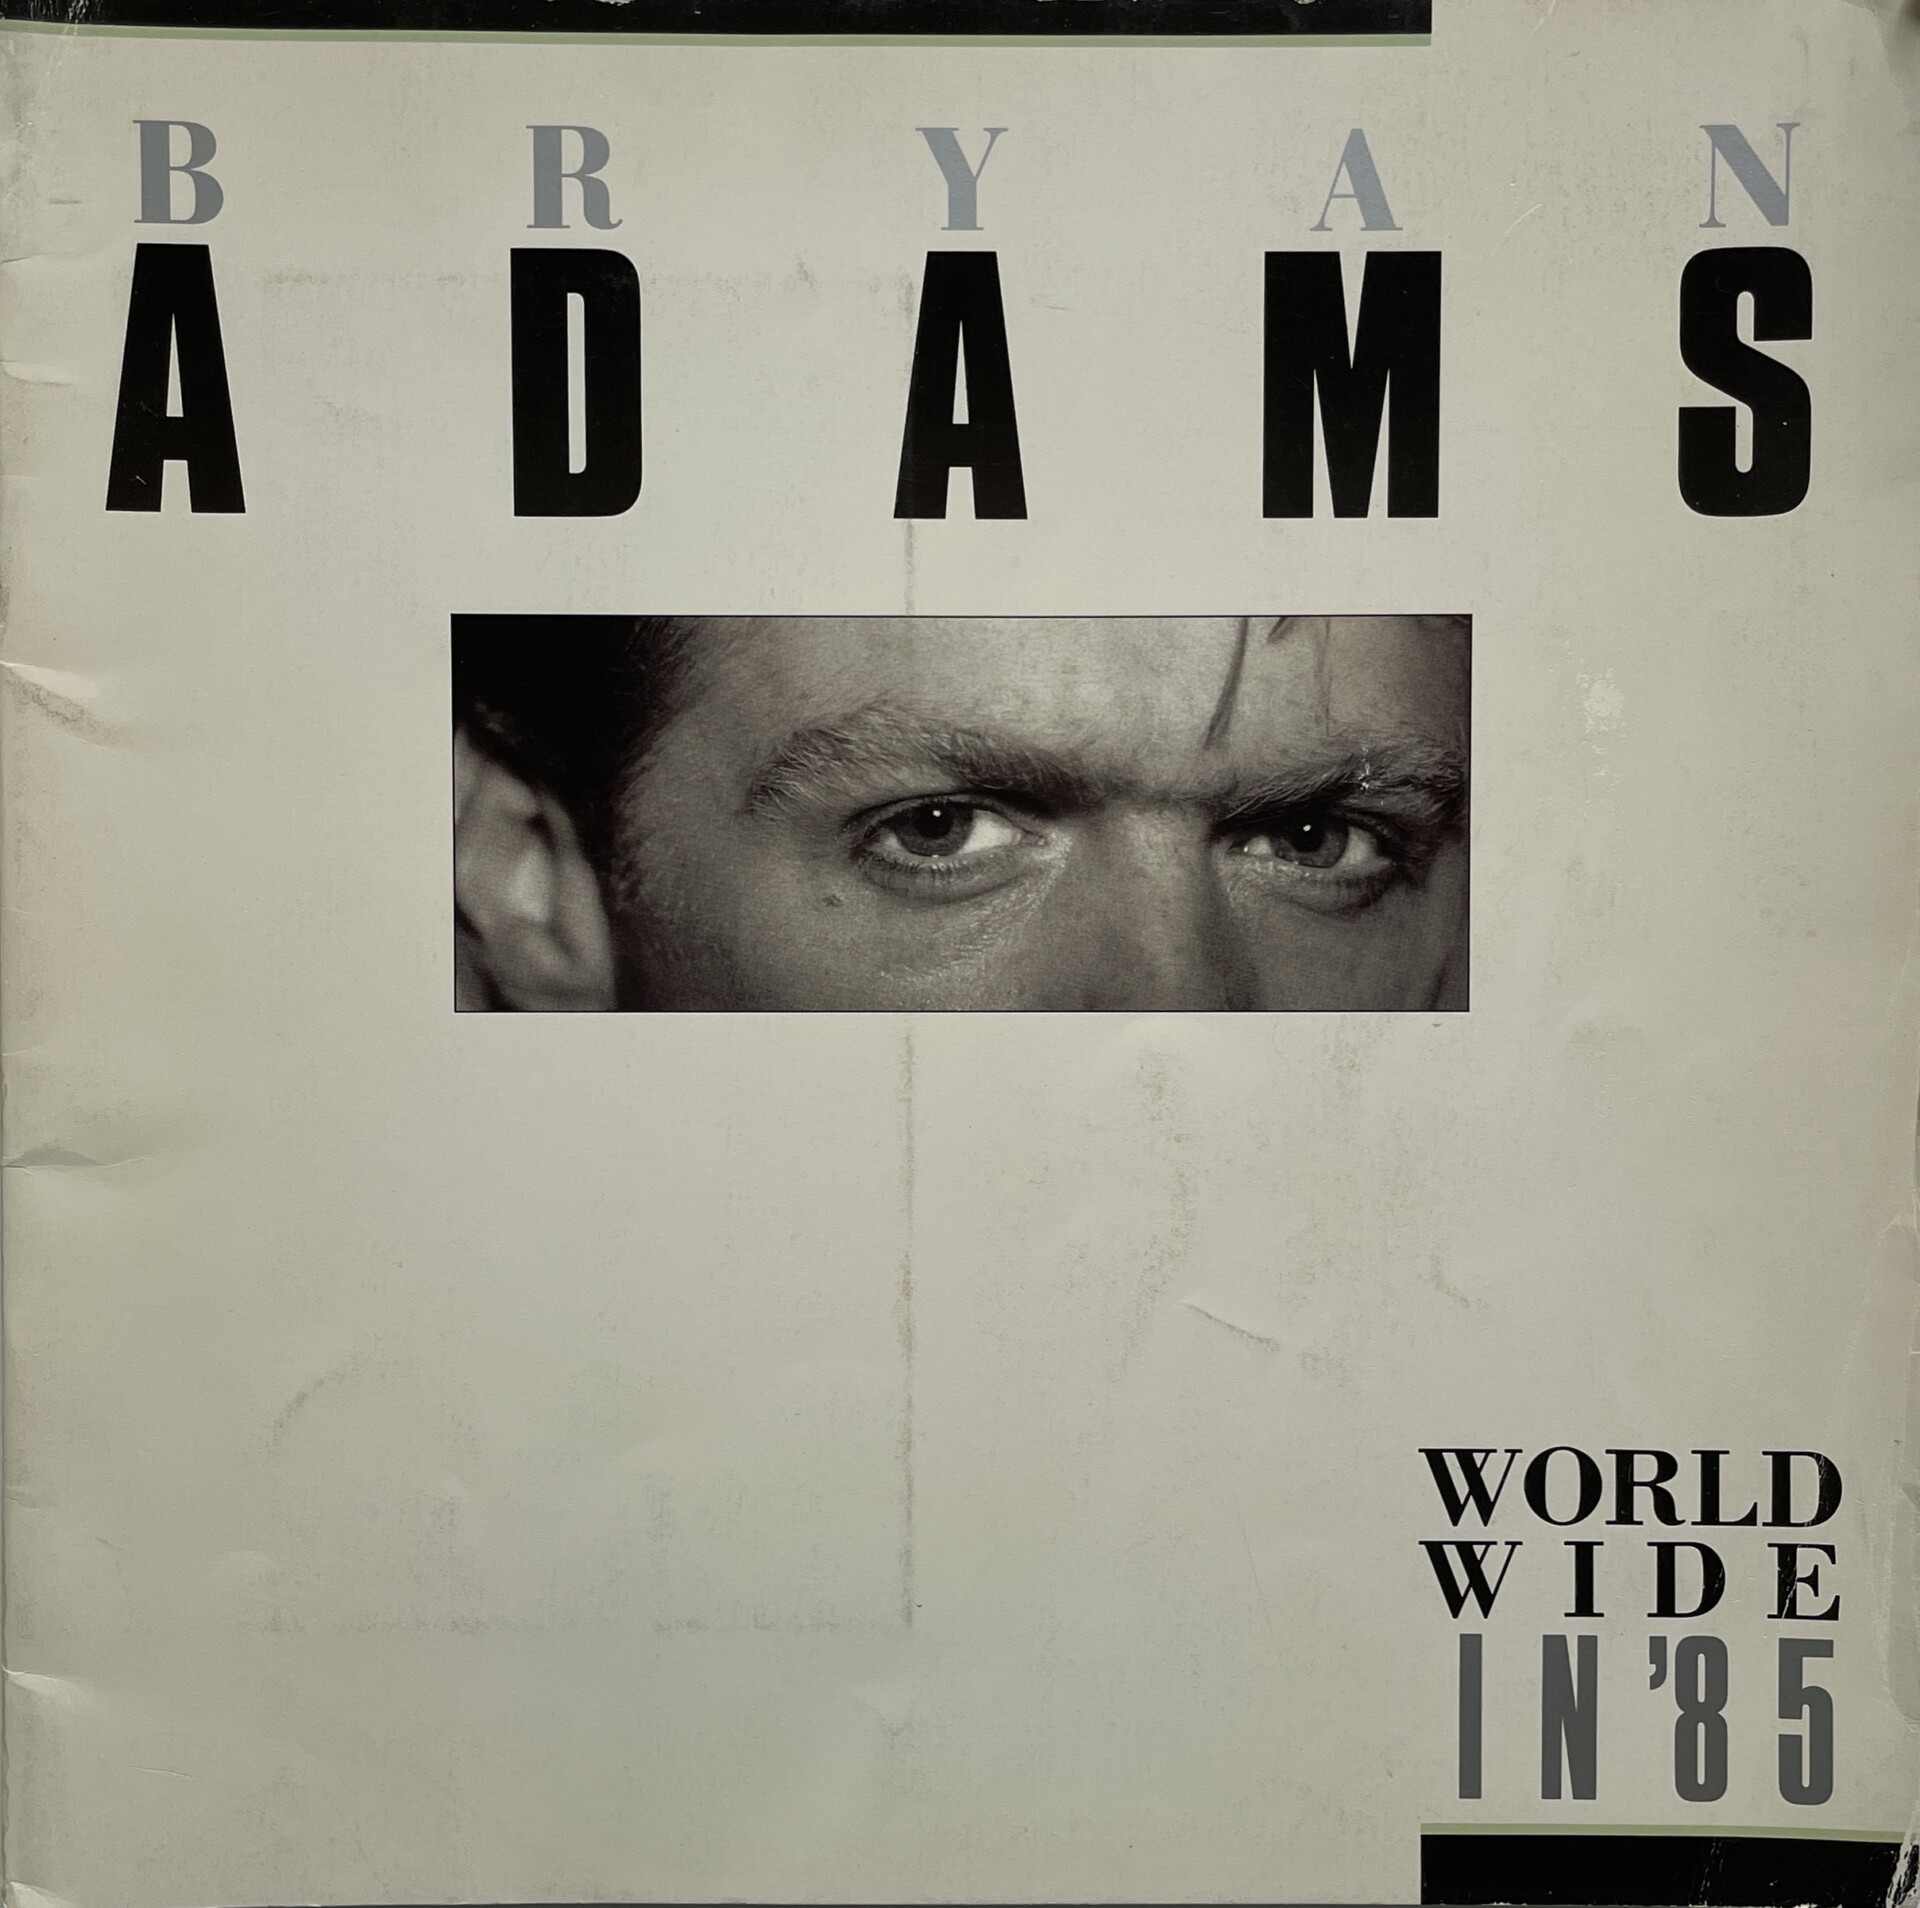 bryan adams 1985 tour dates